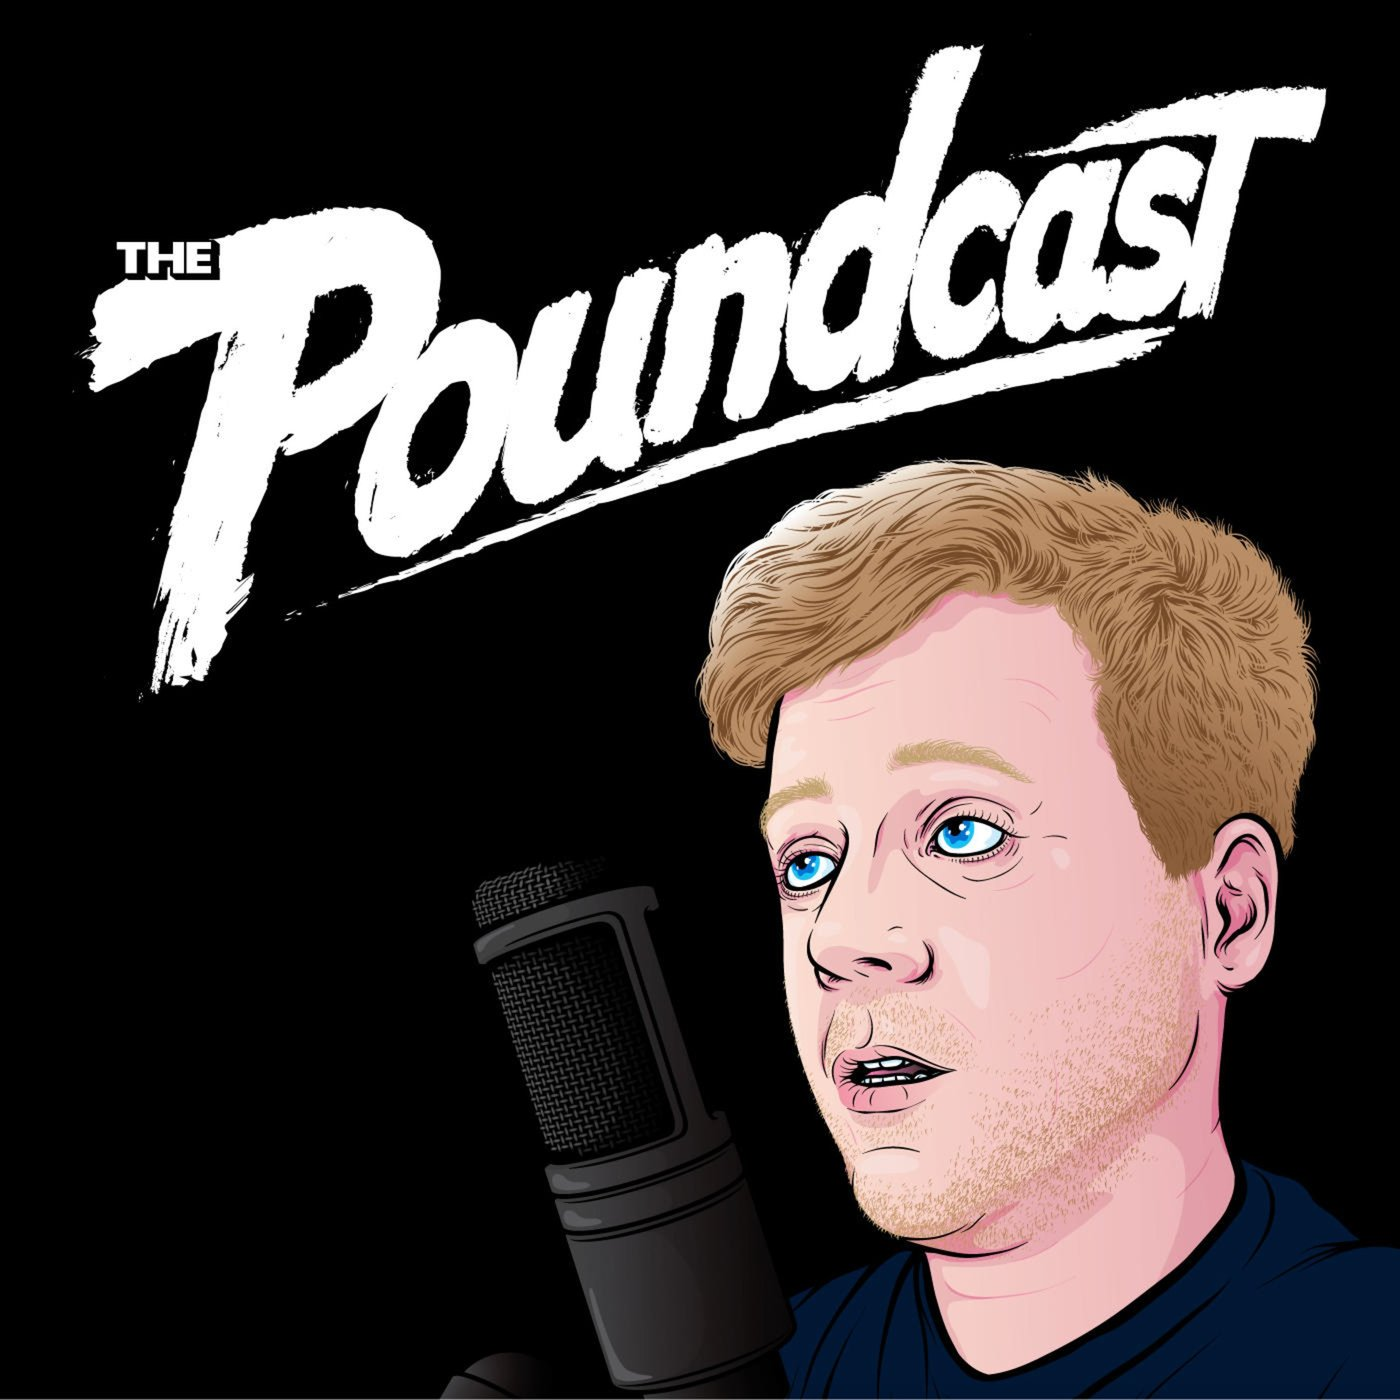 The Worst Poundcast